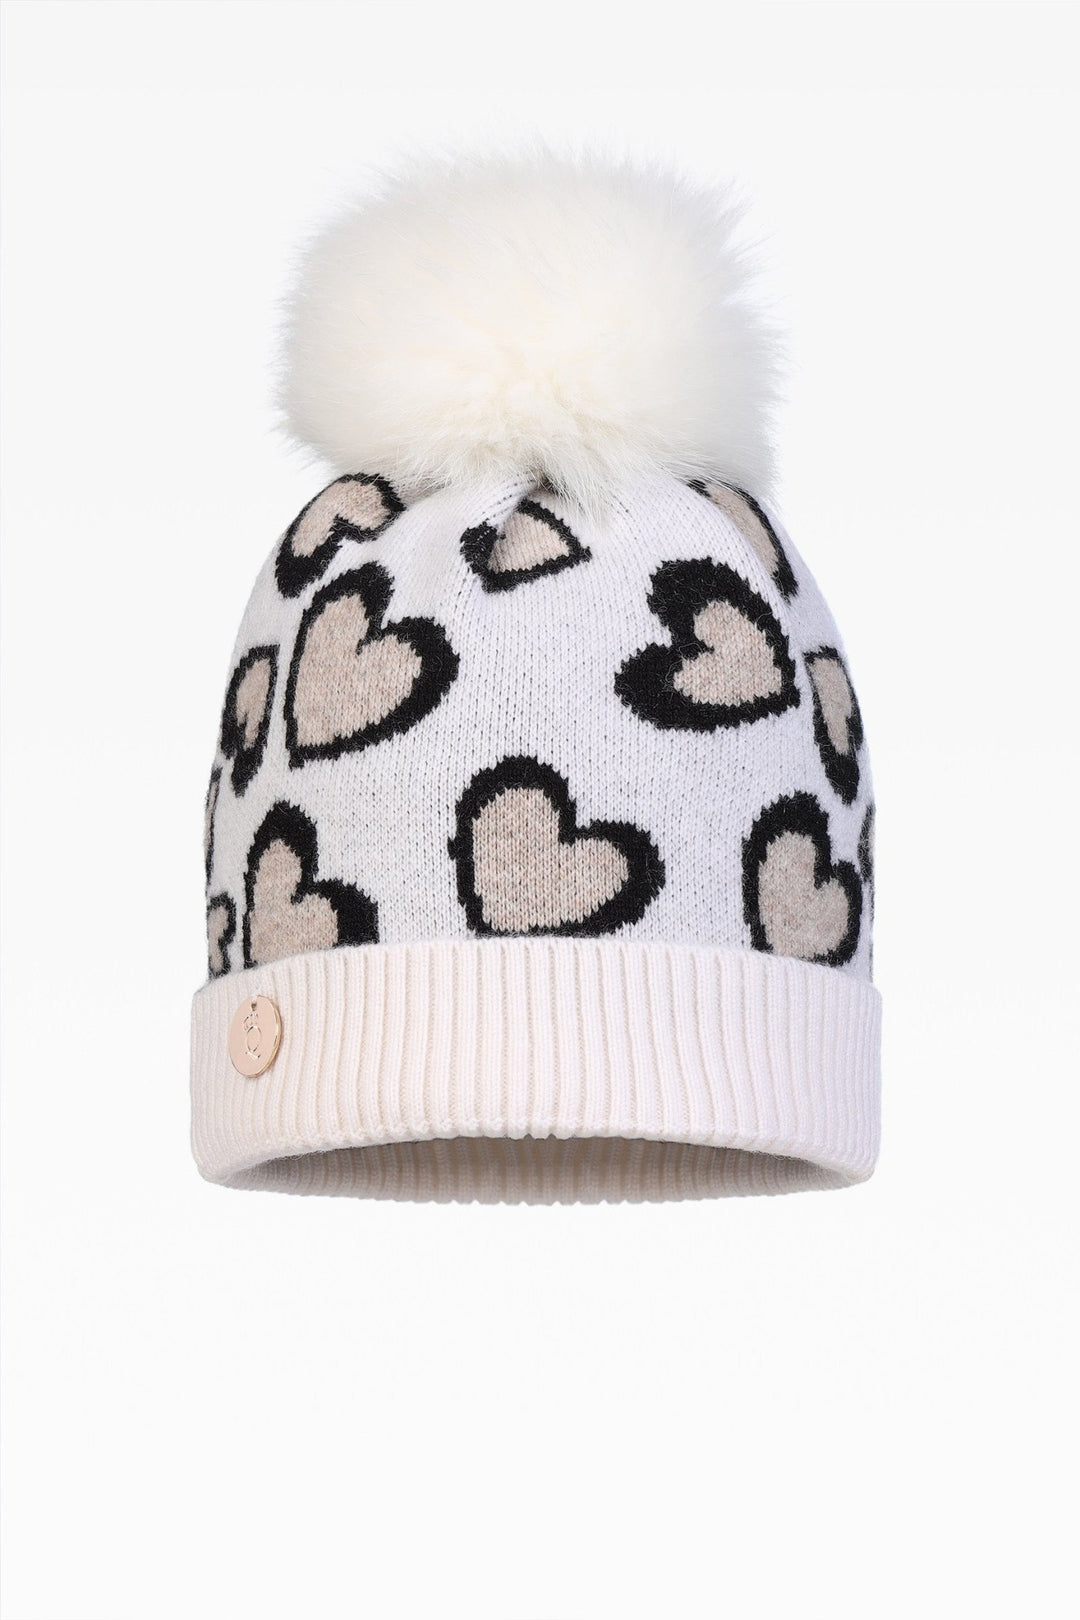 Lily Heart Pom Pom Hat - Real Fur - Dunedin Cashmere